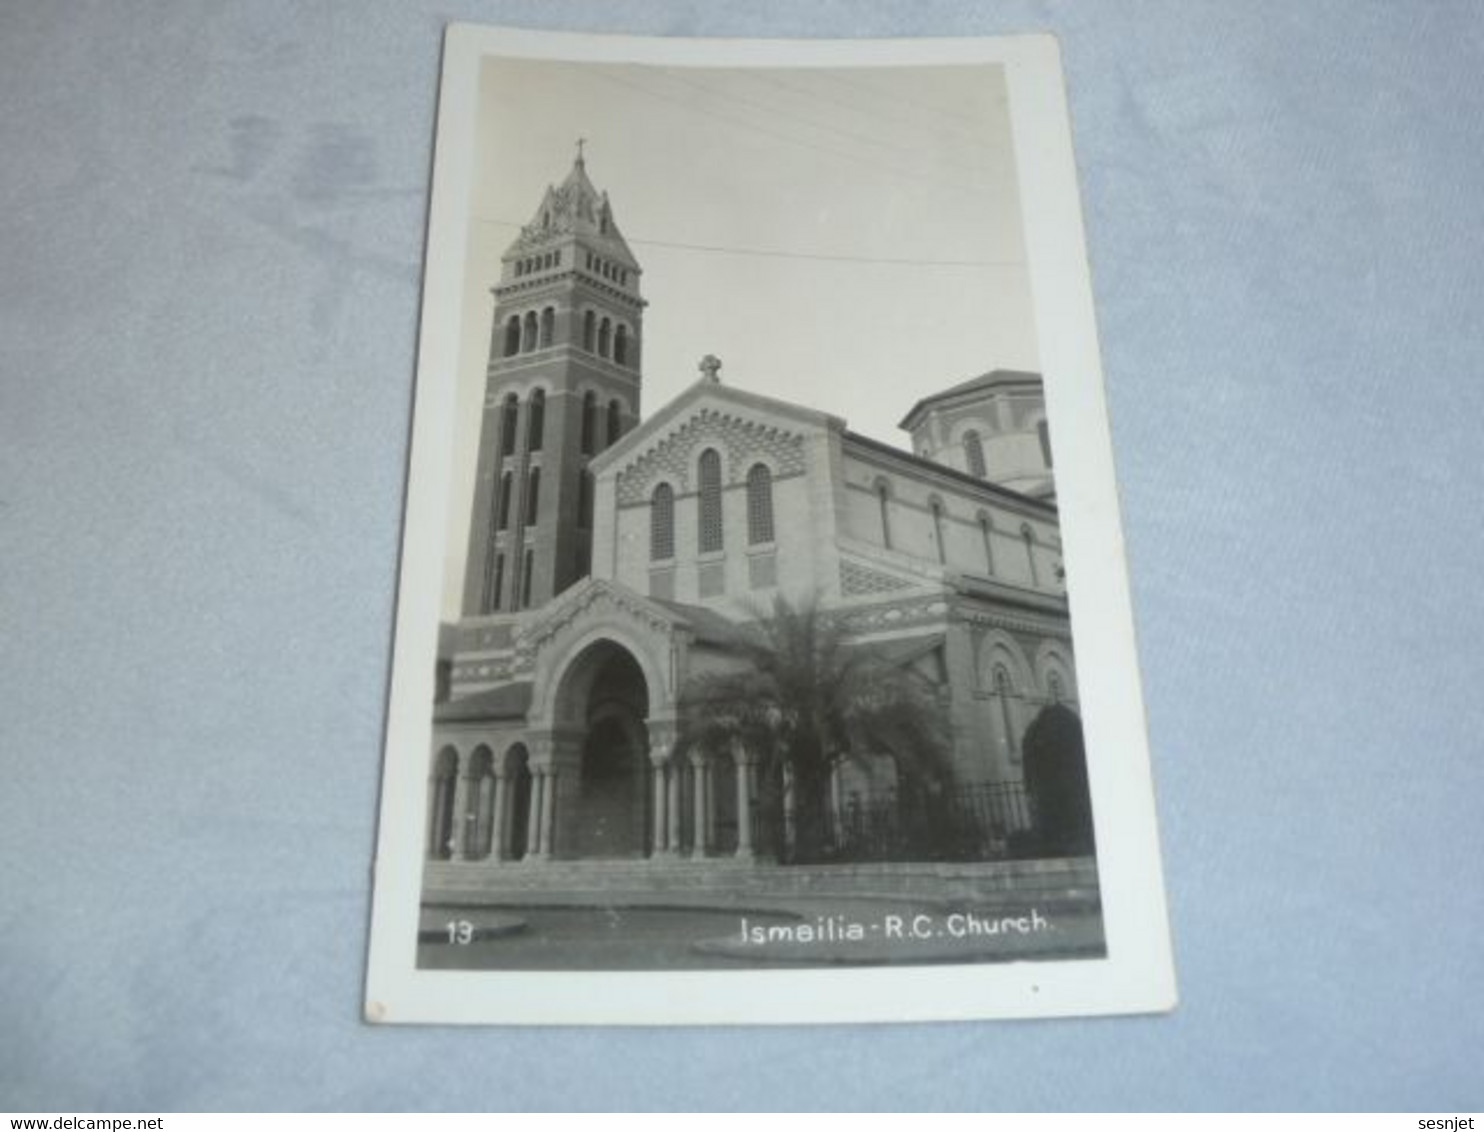 Ismailia - R.c. Church - 13 - Editions Post Card - Année 1960 - - Ismailia